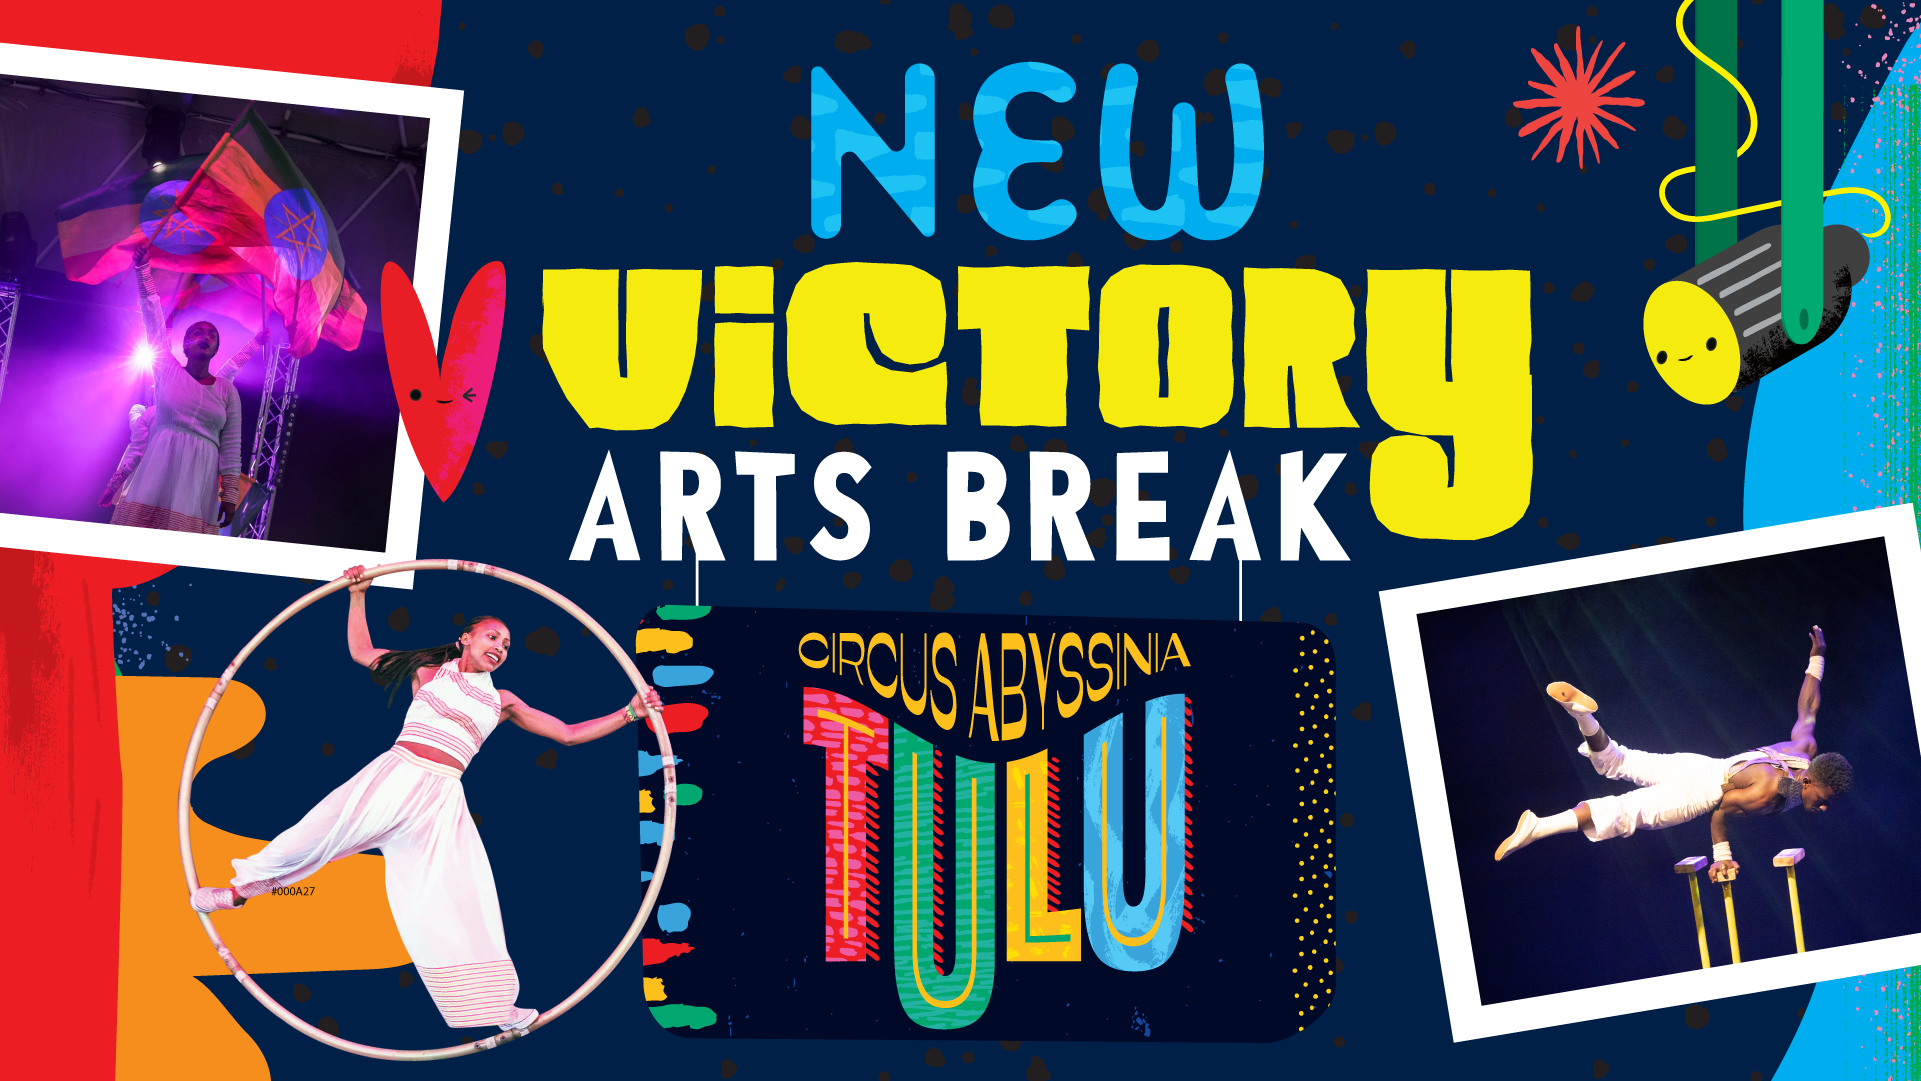 New Victory Arts Break: Circus Abyssinia: Tulu